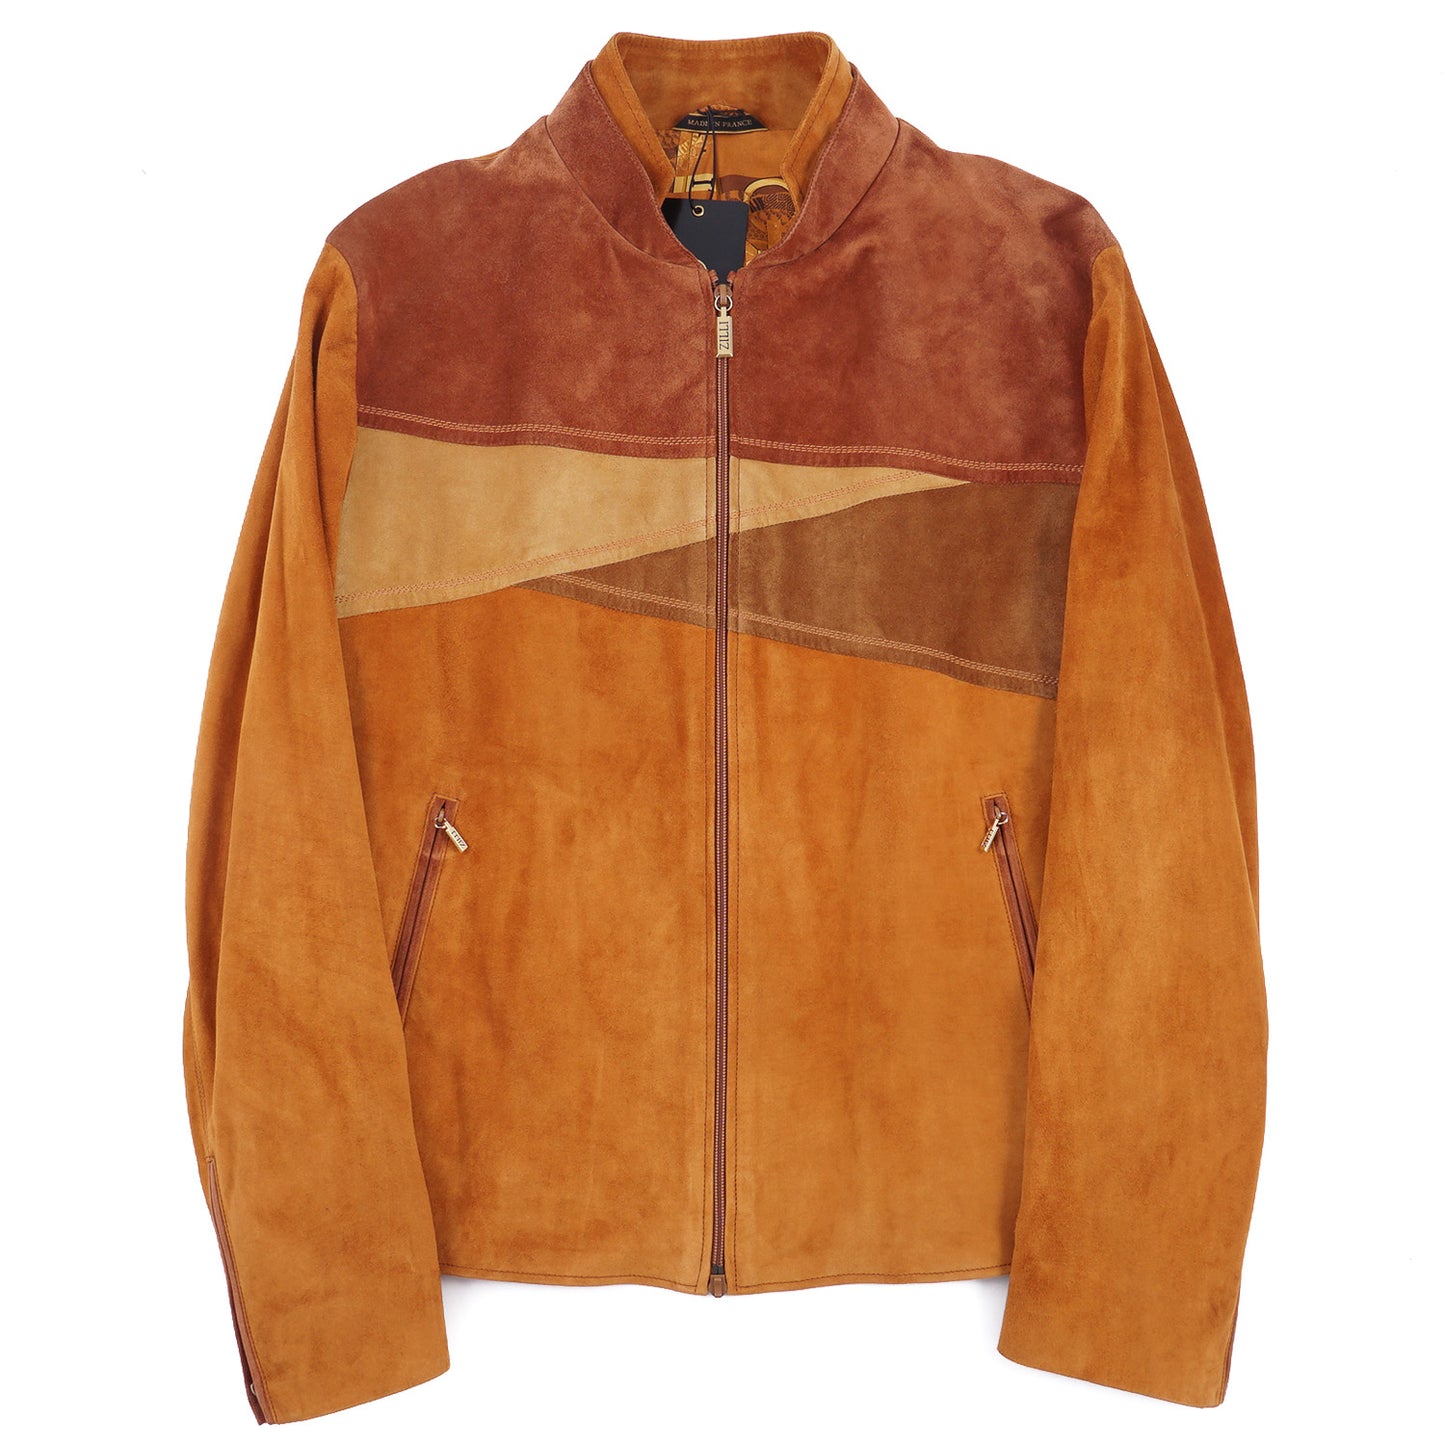 Zilli Velour Suede Leather Jacket - Top Shelf Apparel